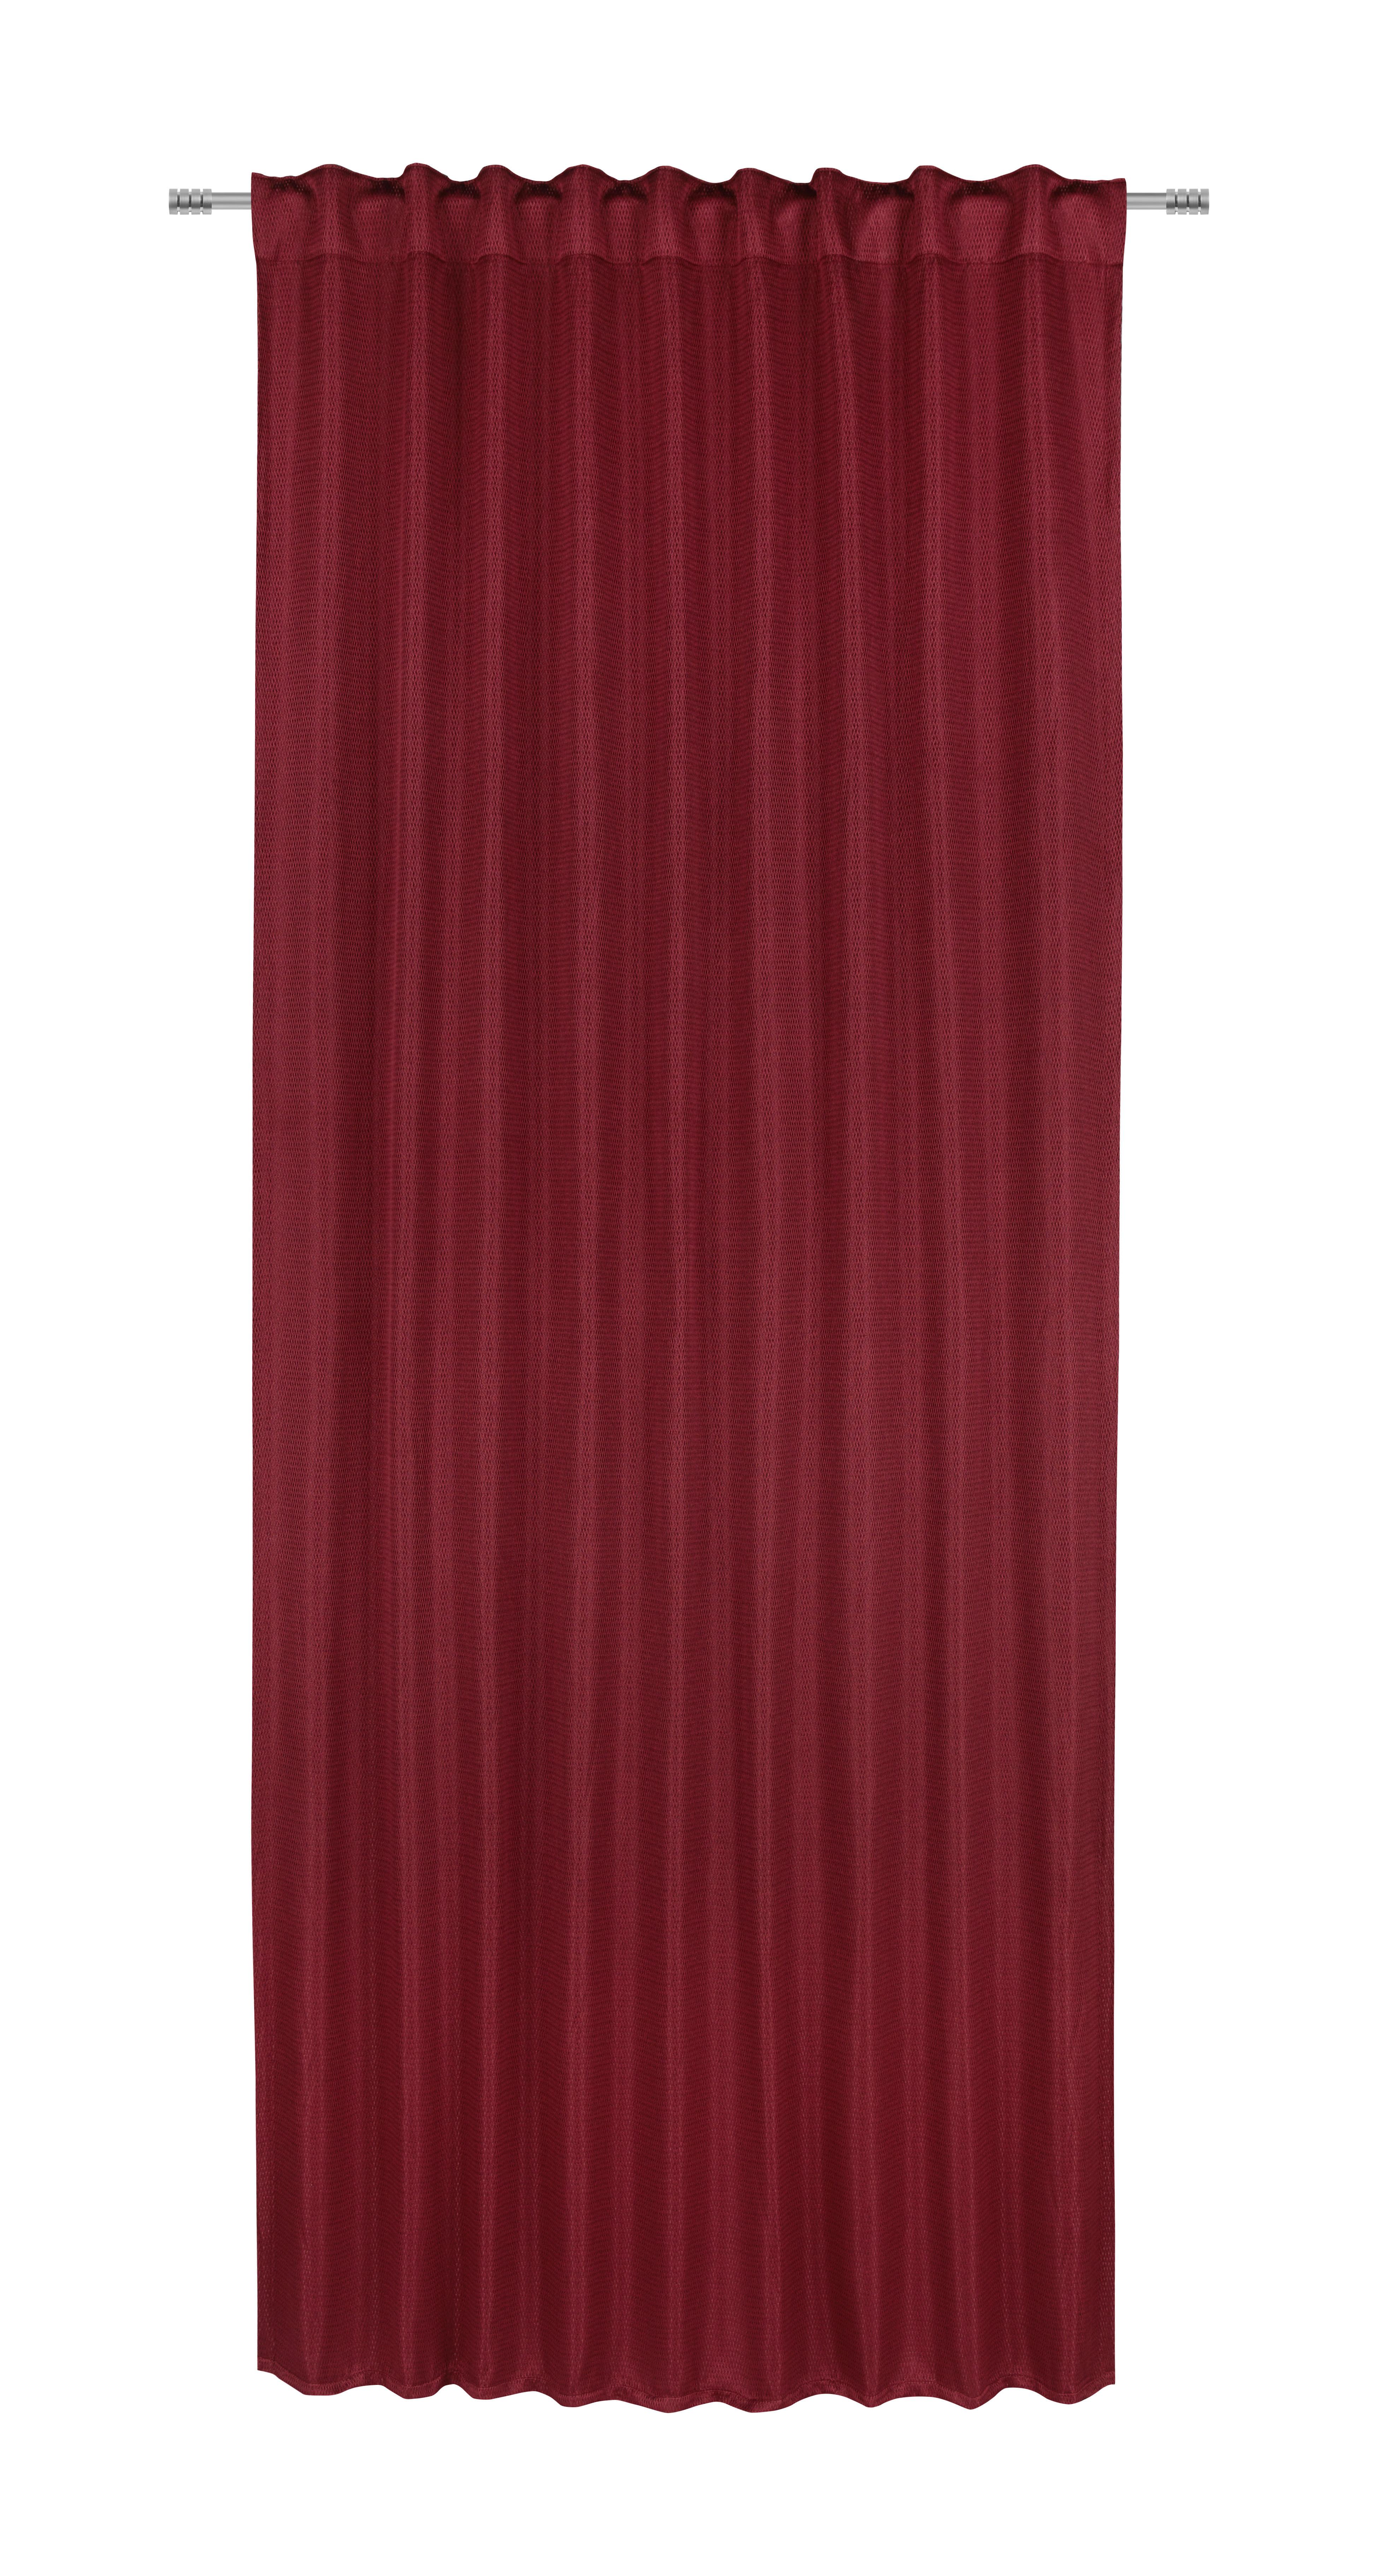 Zatemňovací Záves Carlo, 140/245cm, Červená - červená, textil (140/245cm) - Premium Living